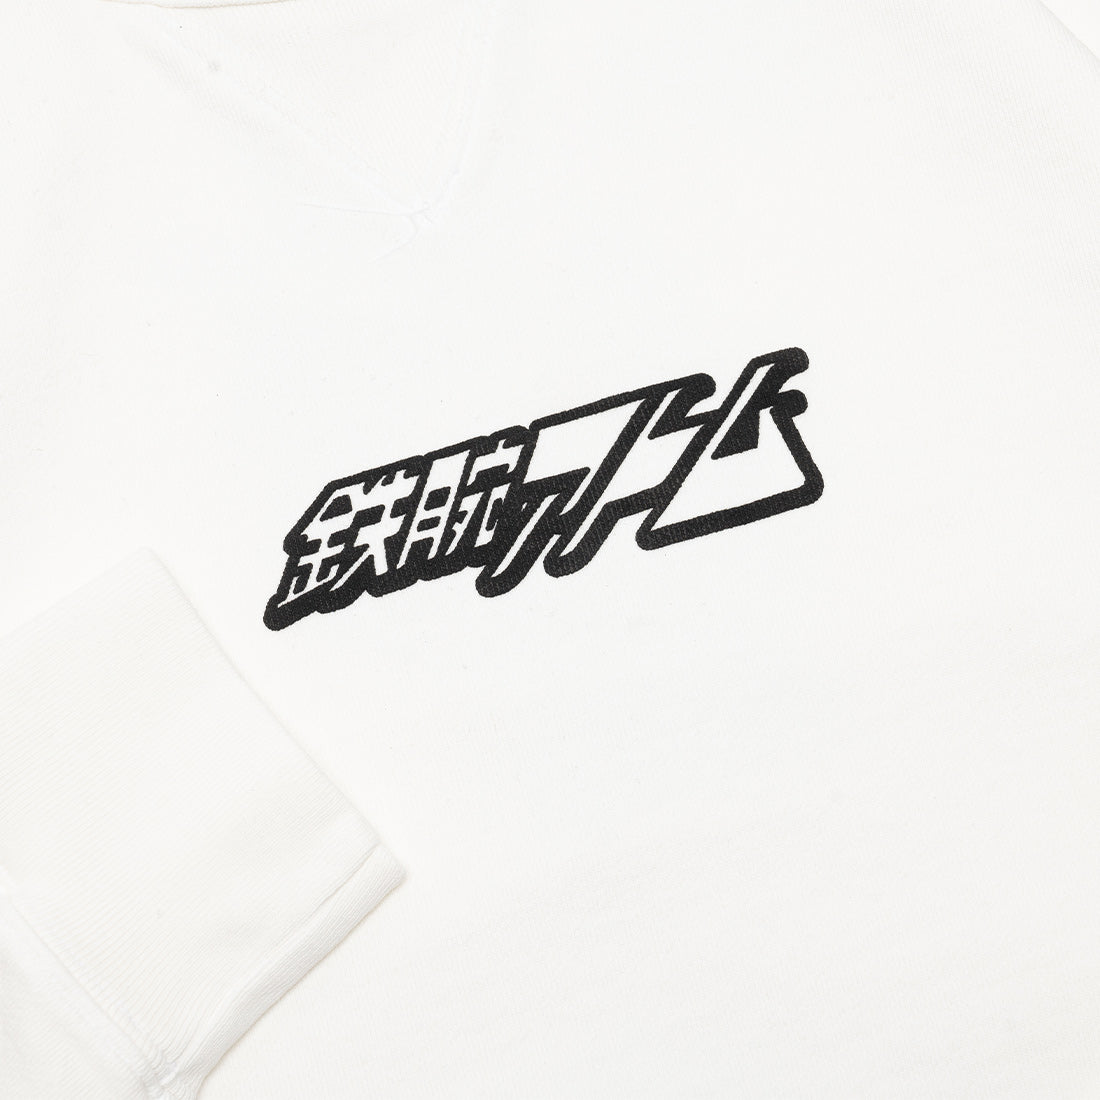 BAIT x Astro Boy x Louis De Guzman Men Crewneck Sweater (white / off white)